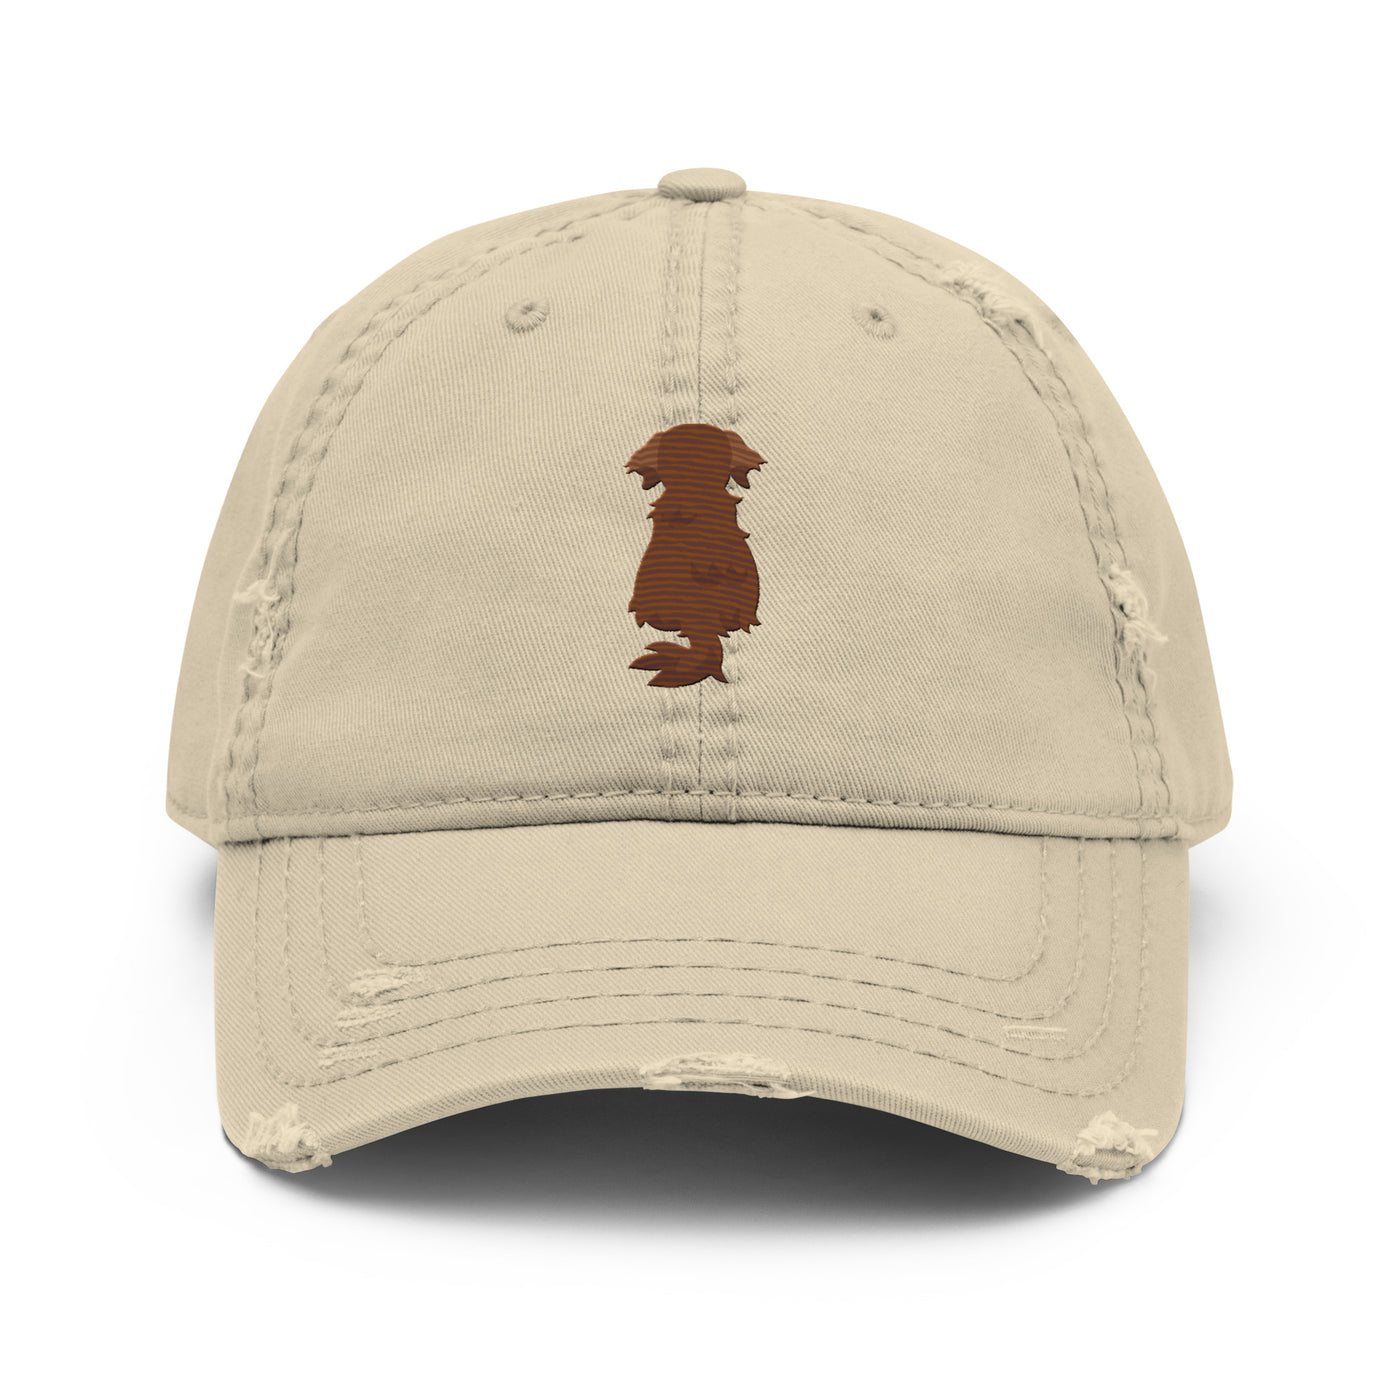 Golden Retriever Back Embroidered Hat